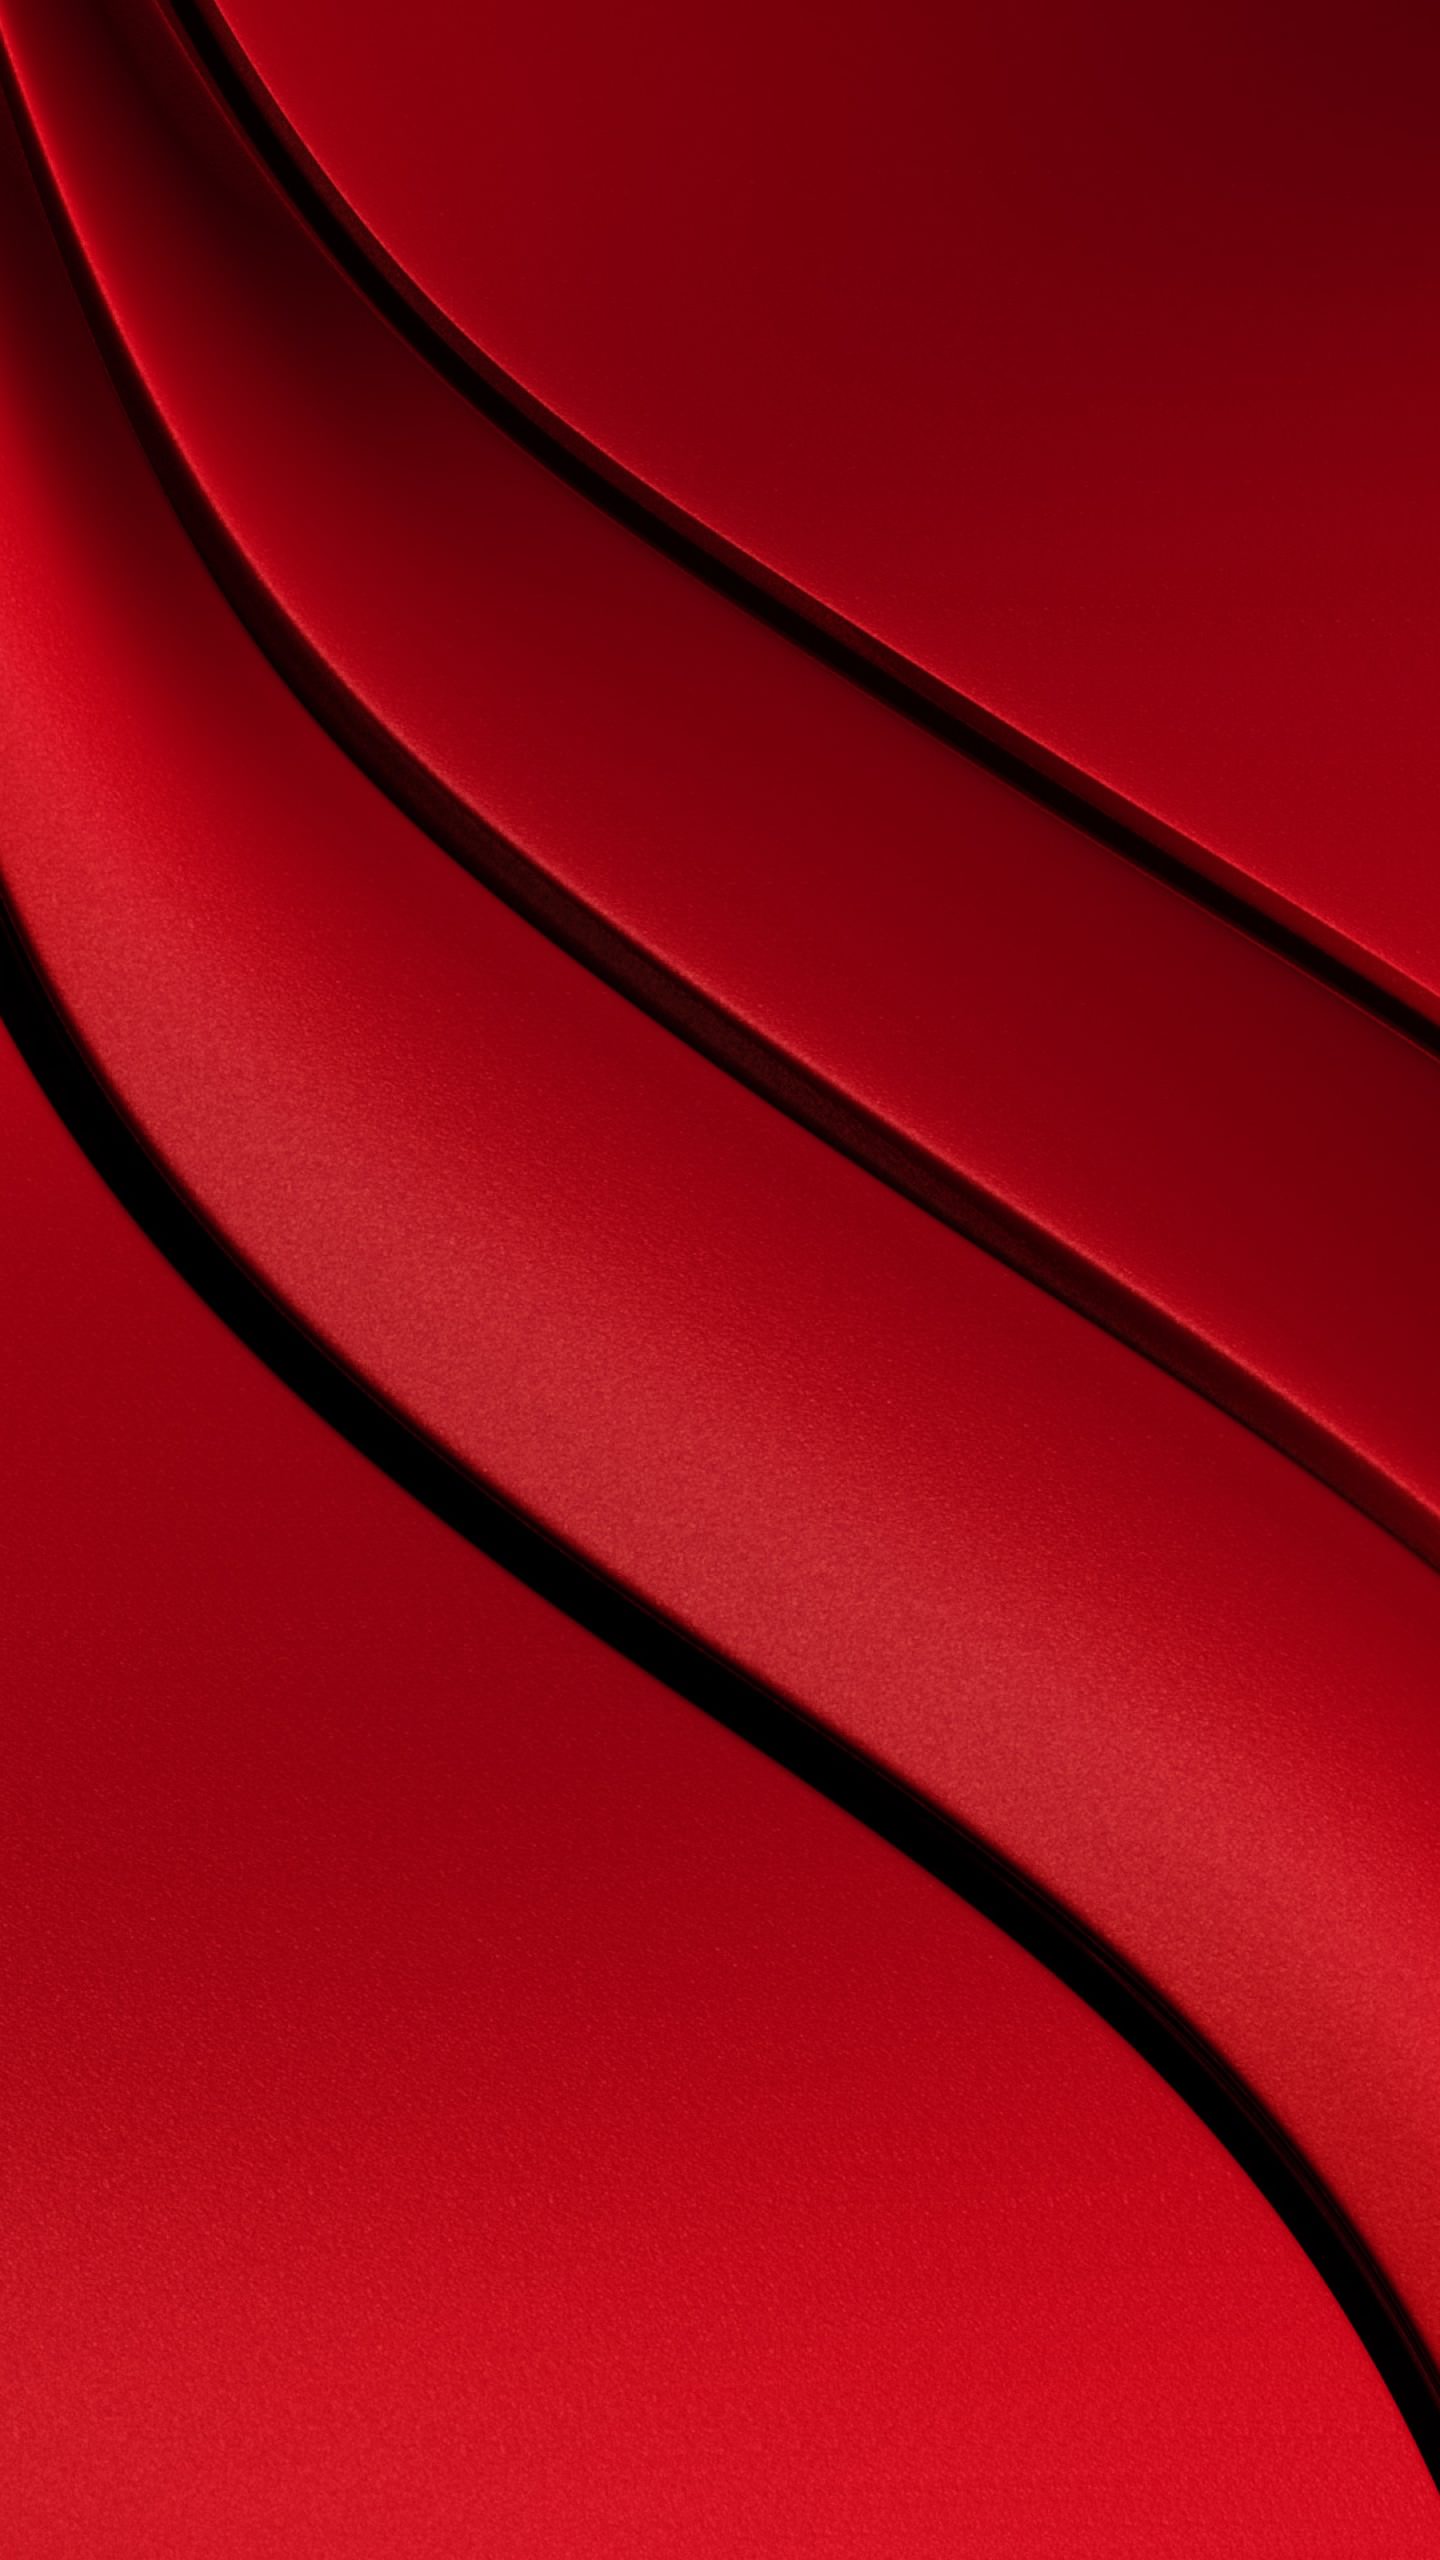 Red Cool | wallpaper.sc SmartPhone